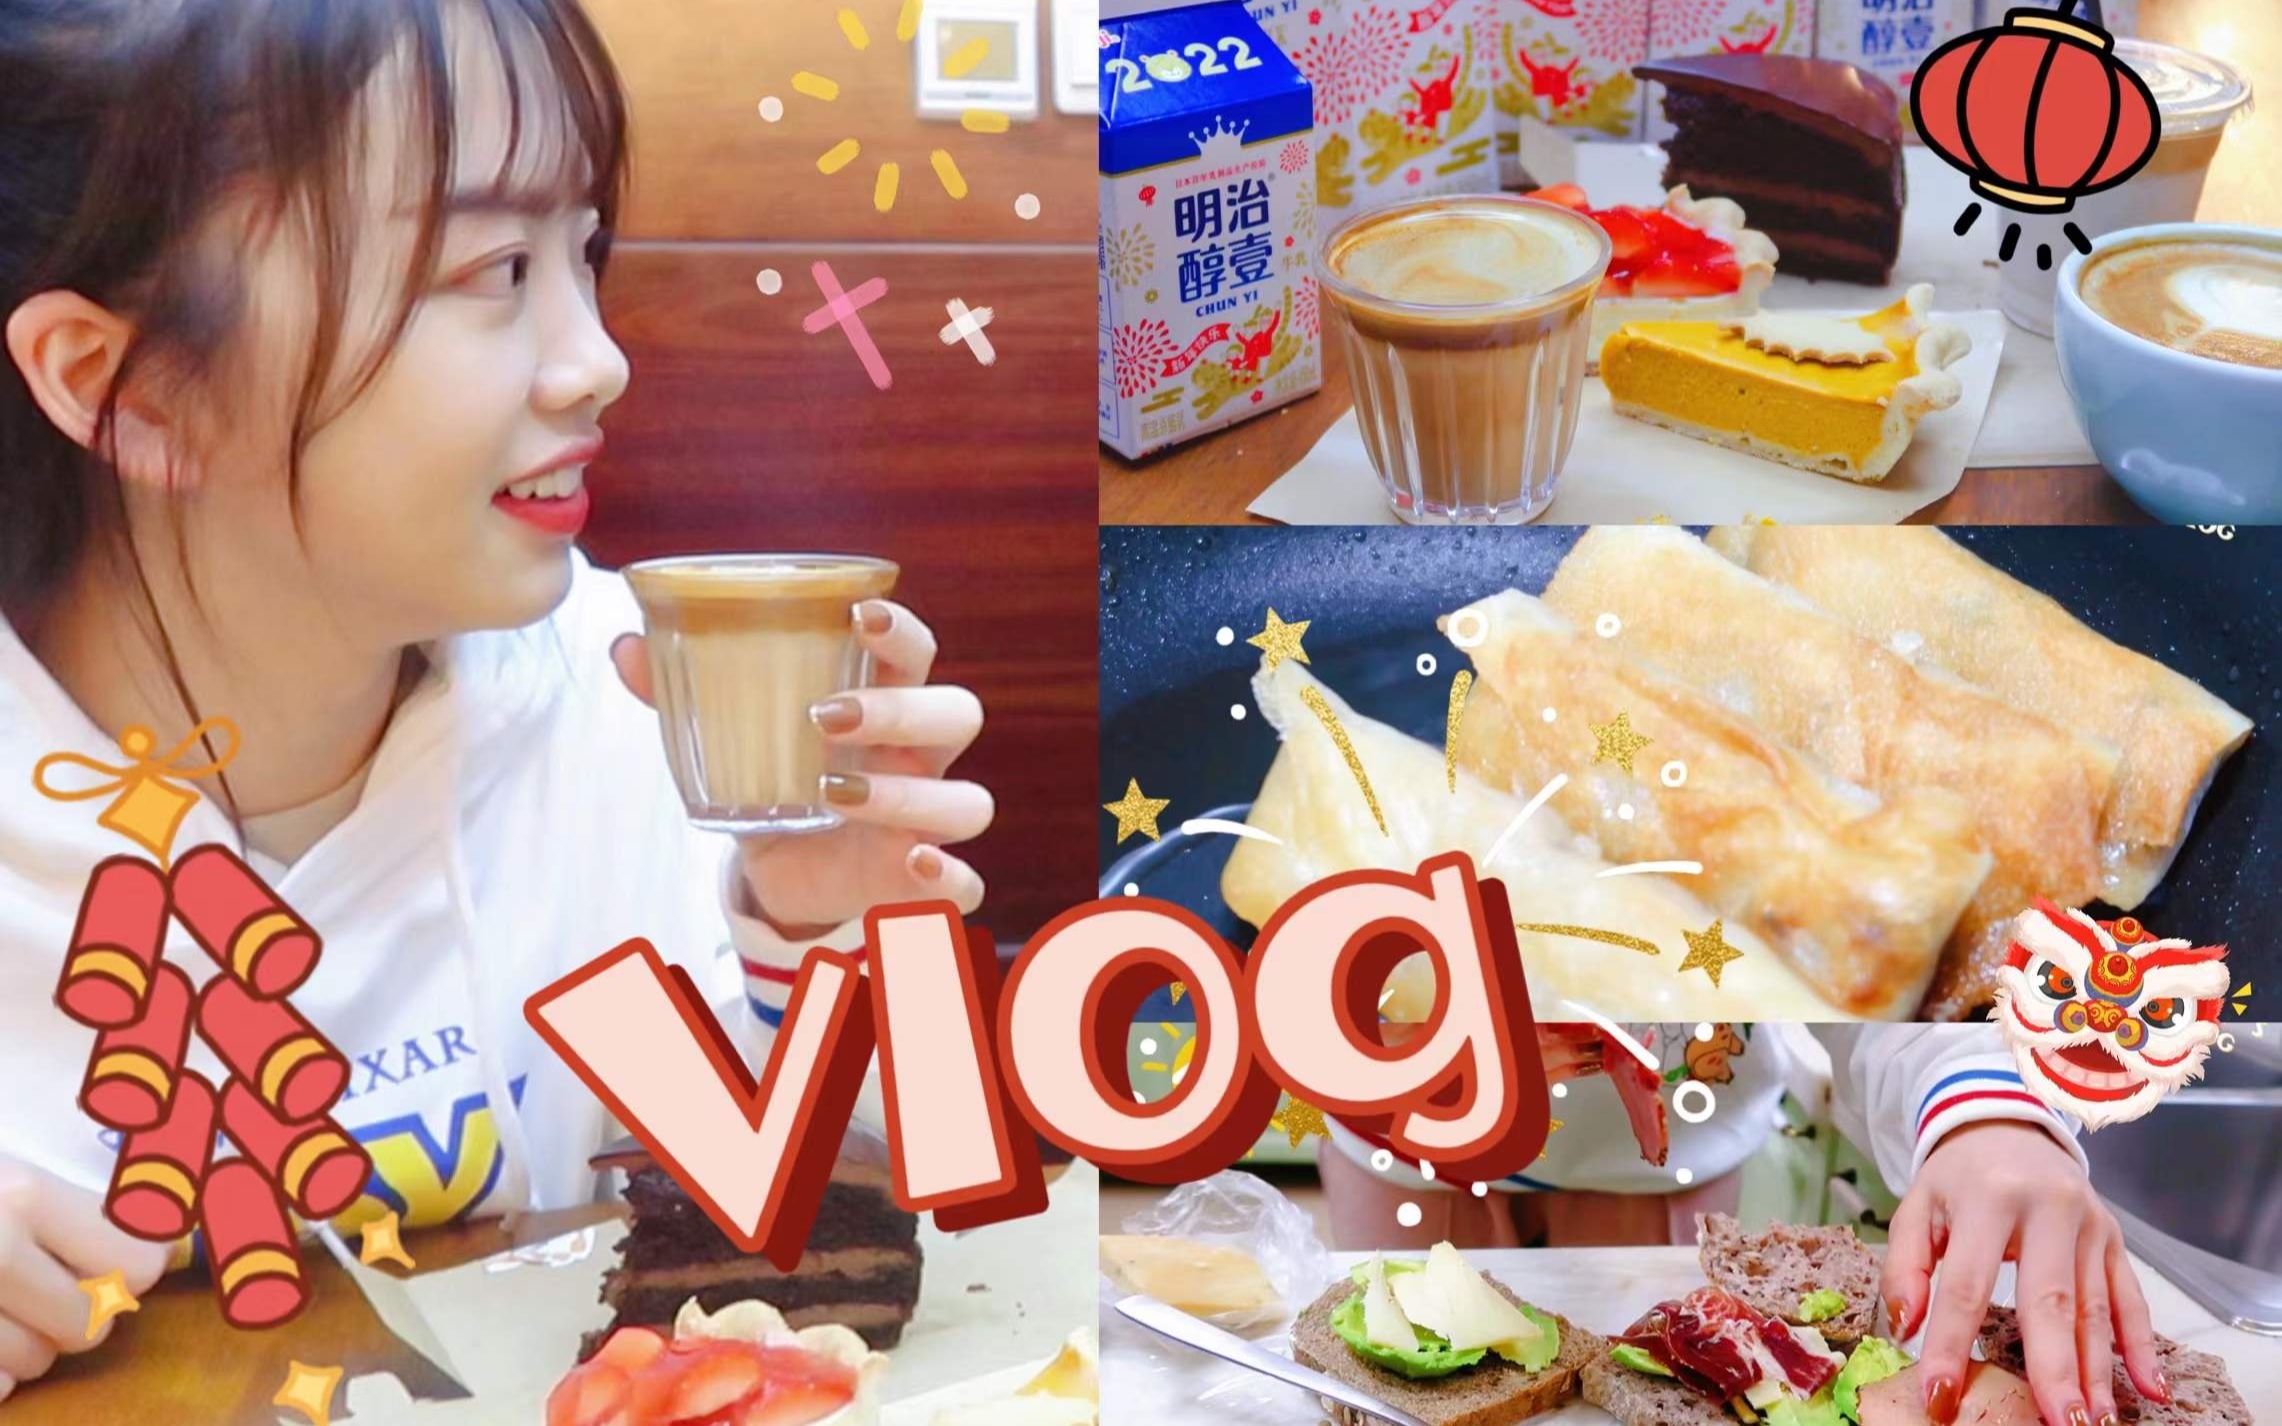 Vlog | 在家工作效率加倍！包春卷/咖啡用具分享/南瓜牛奶甜品/家庭晚餐